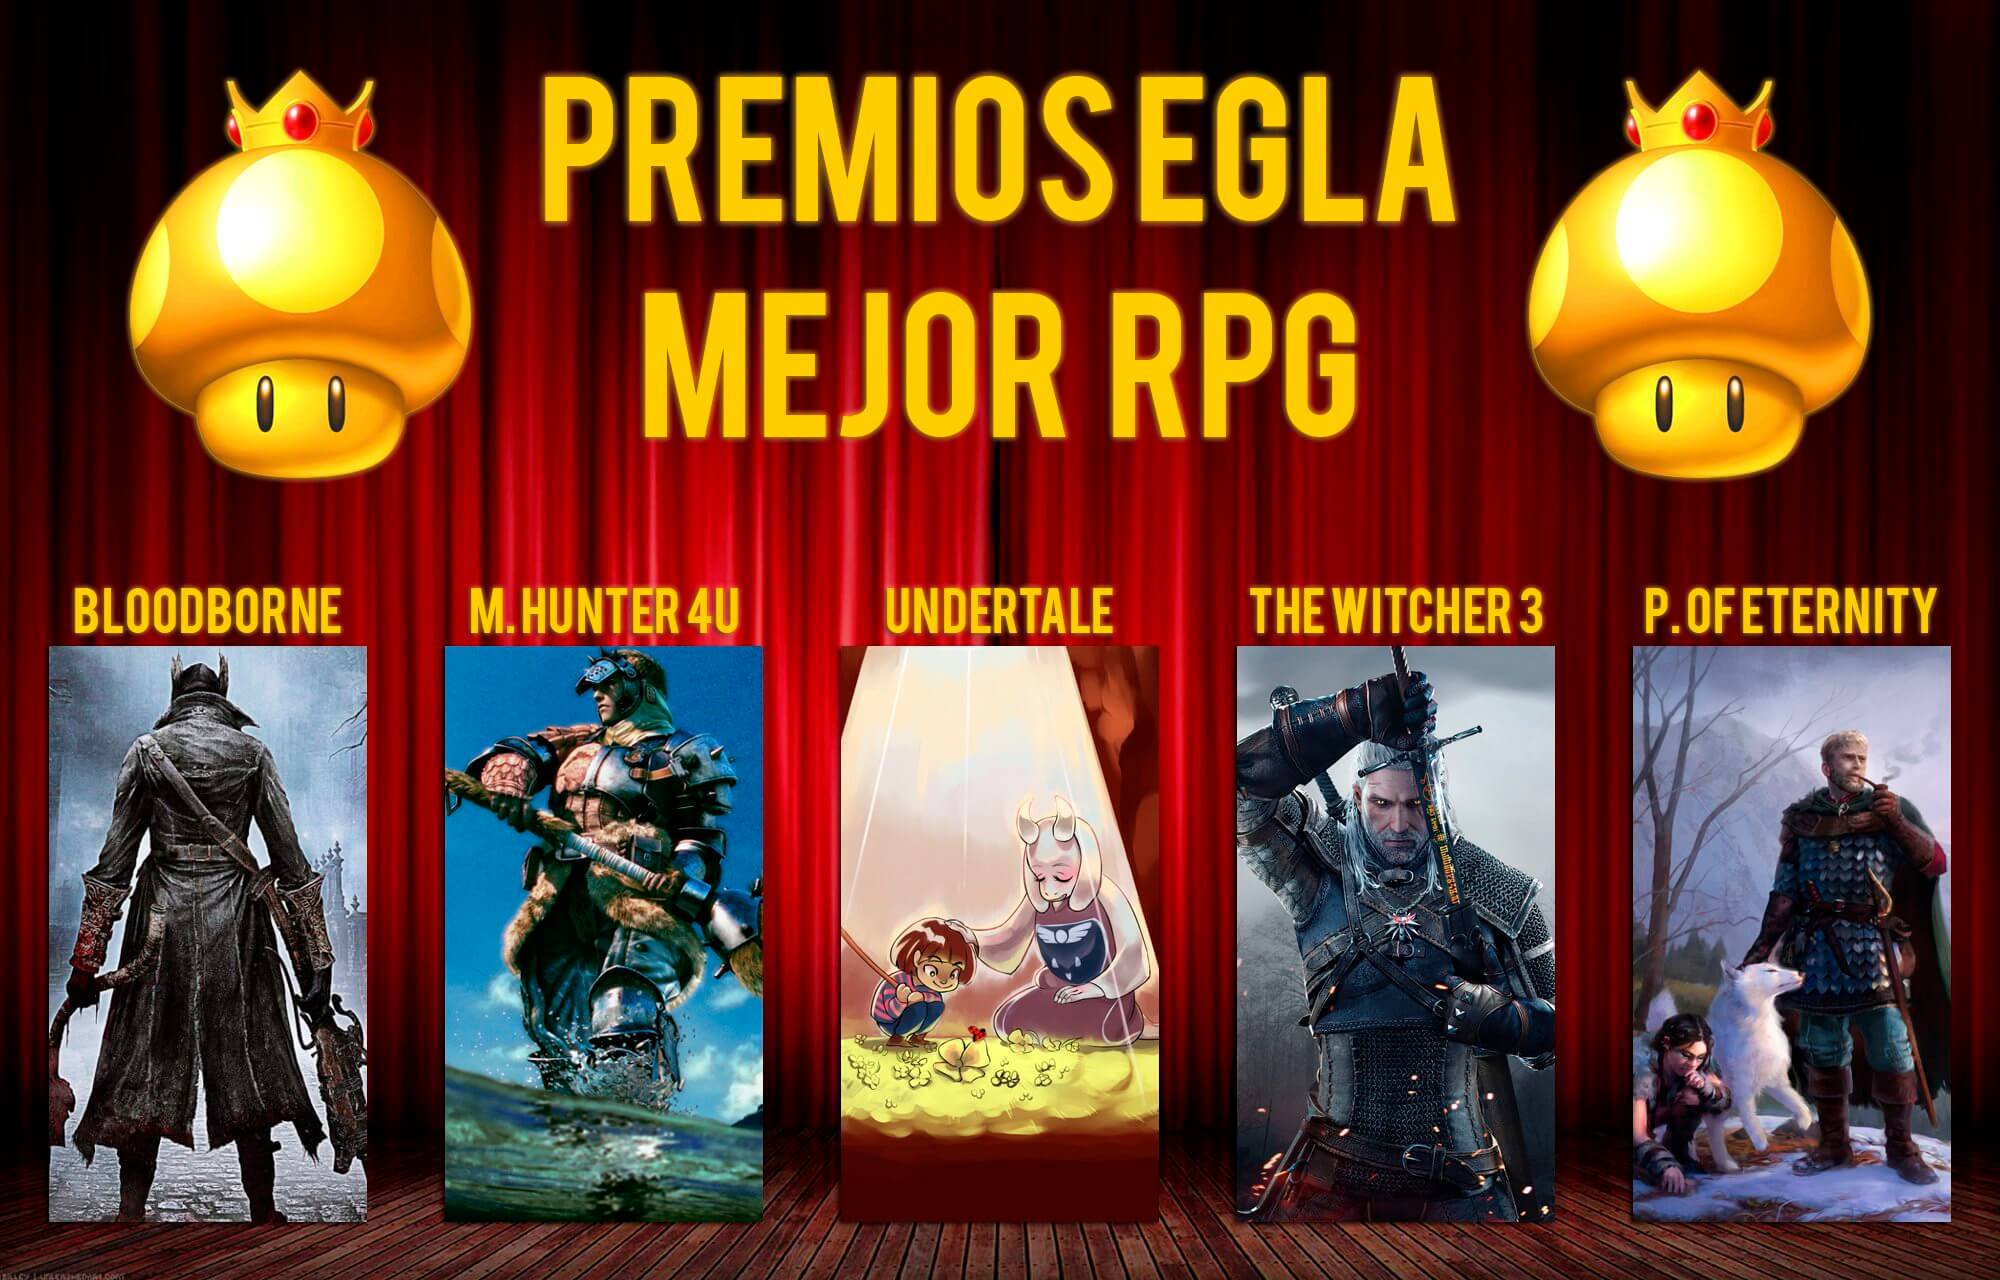 Premios EGLA 2015 Mejor RPG